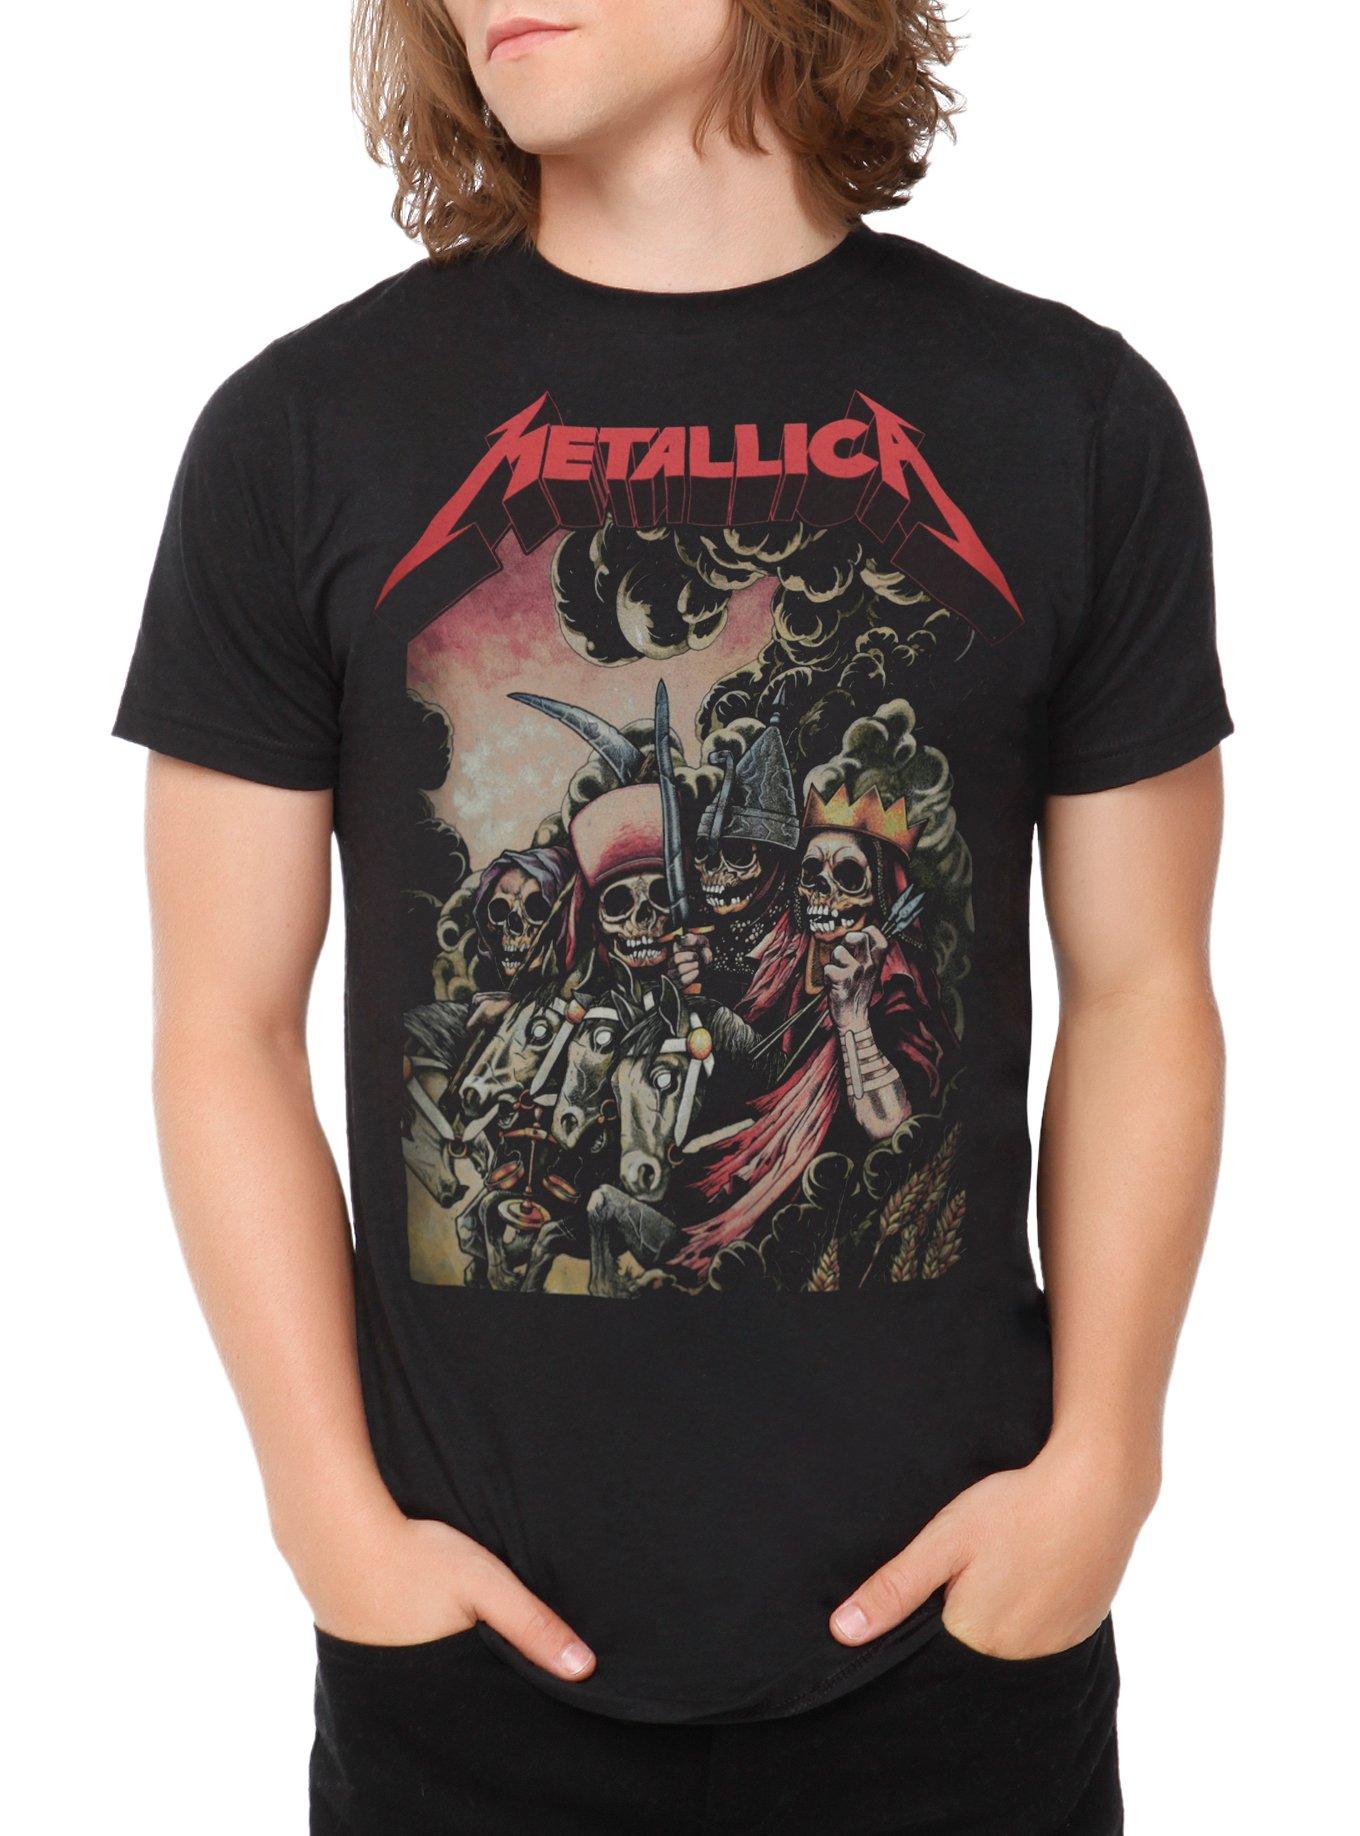 Metallica Four Horsemen T-Shirt Hot Topic